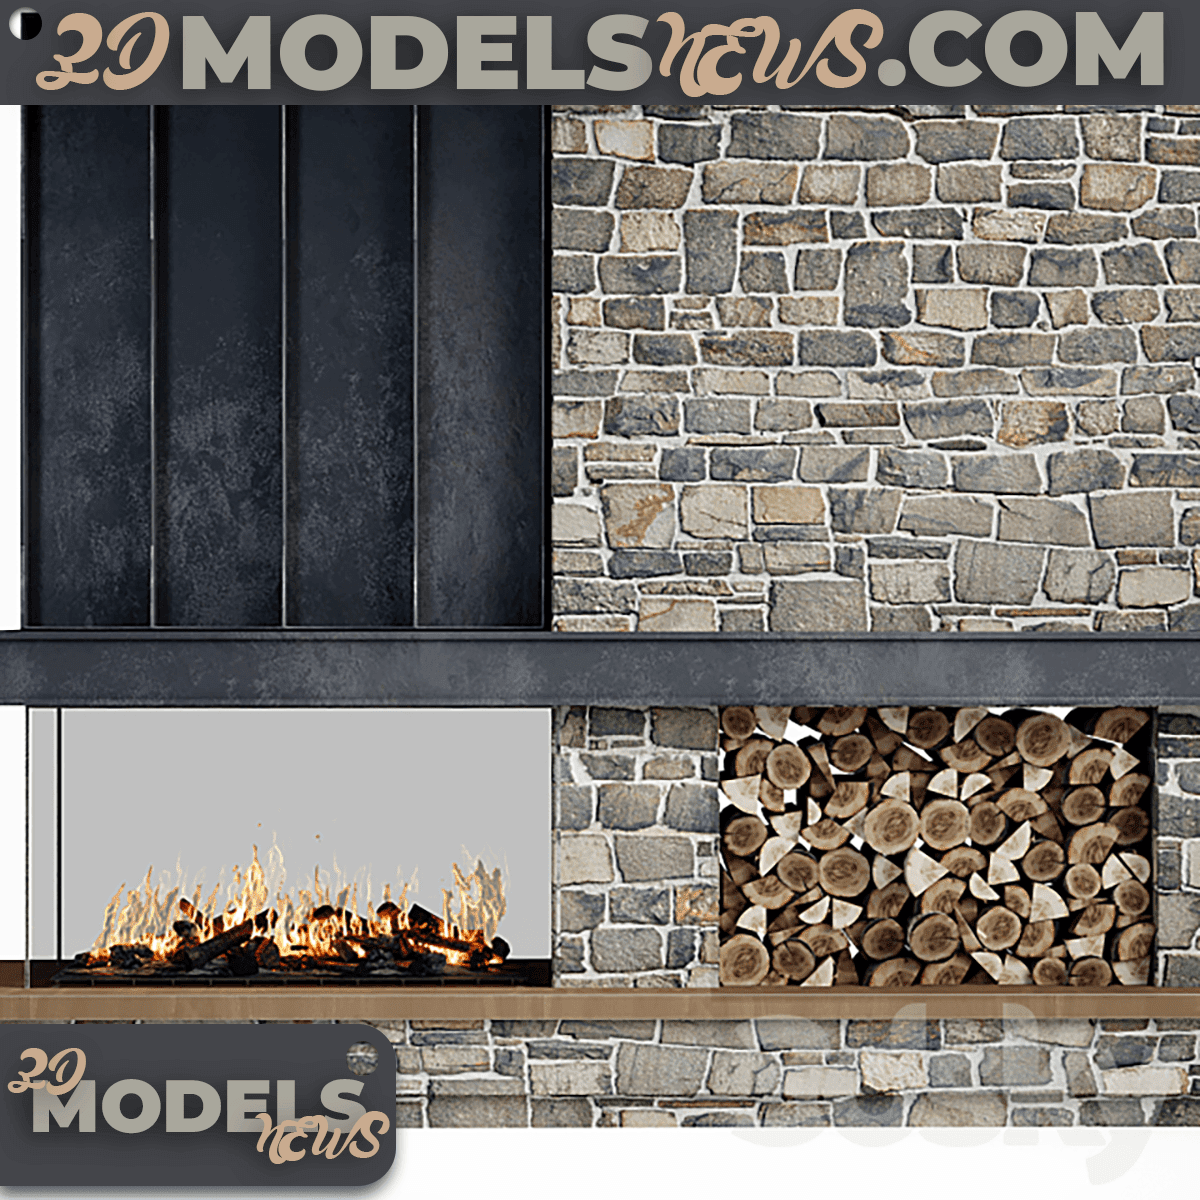 Fireplace Modern Model 79 2